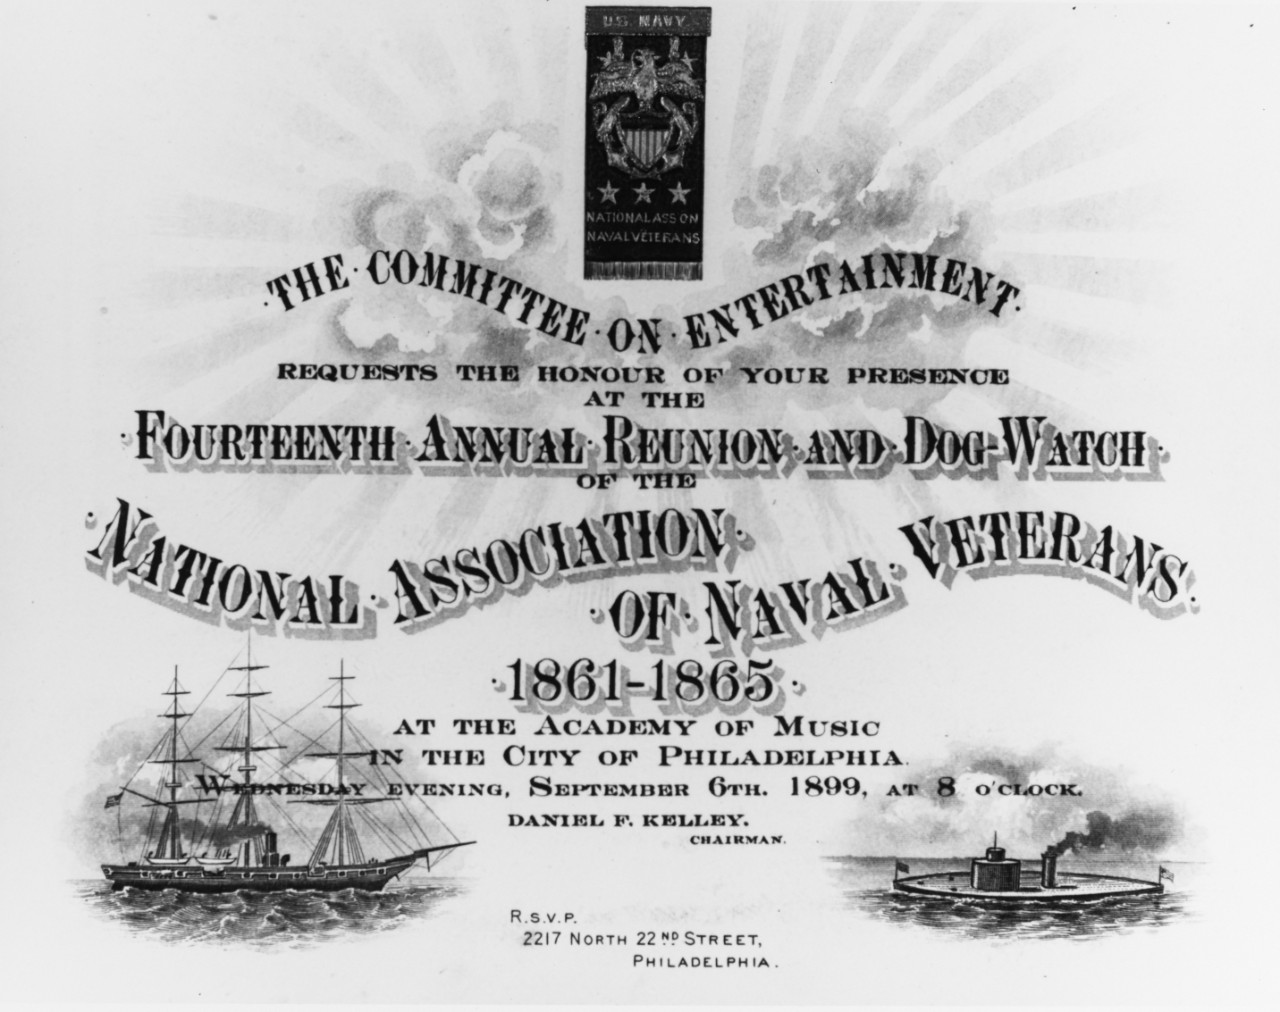 National Association of Naval Veterans, 1861-1865.